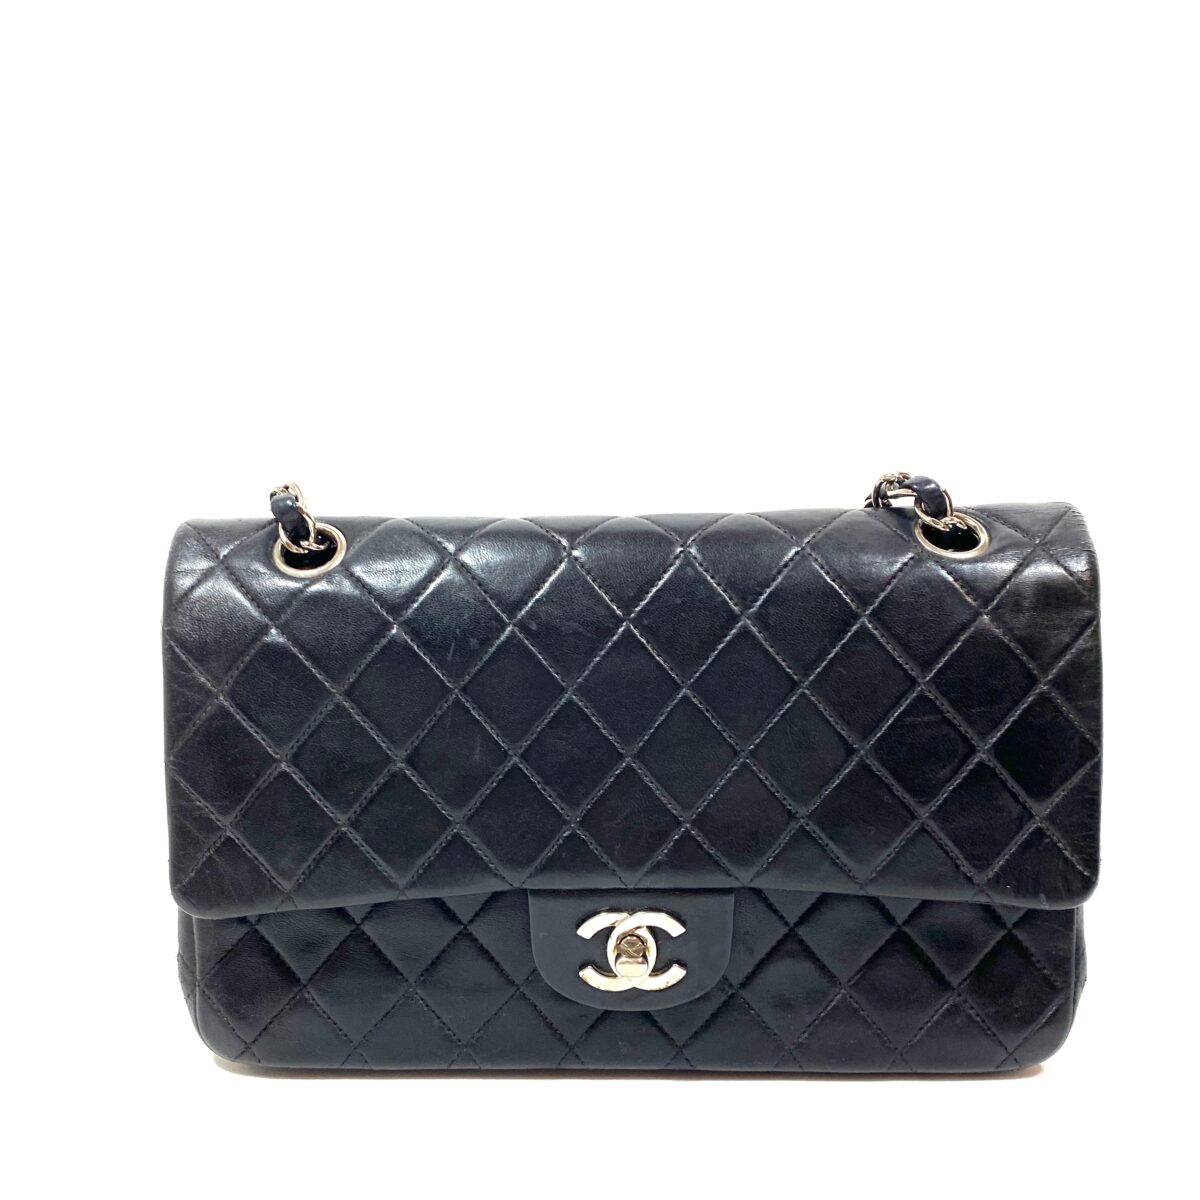 Chanel vintage bags väskor